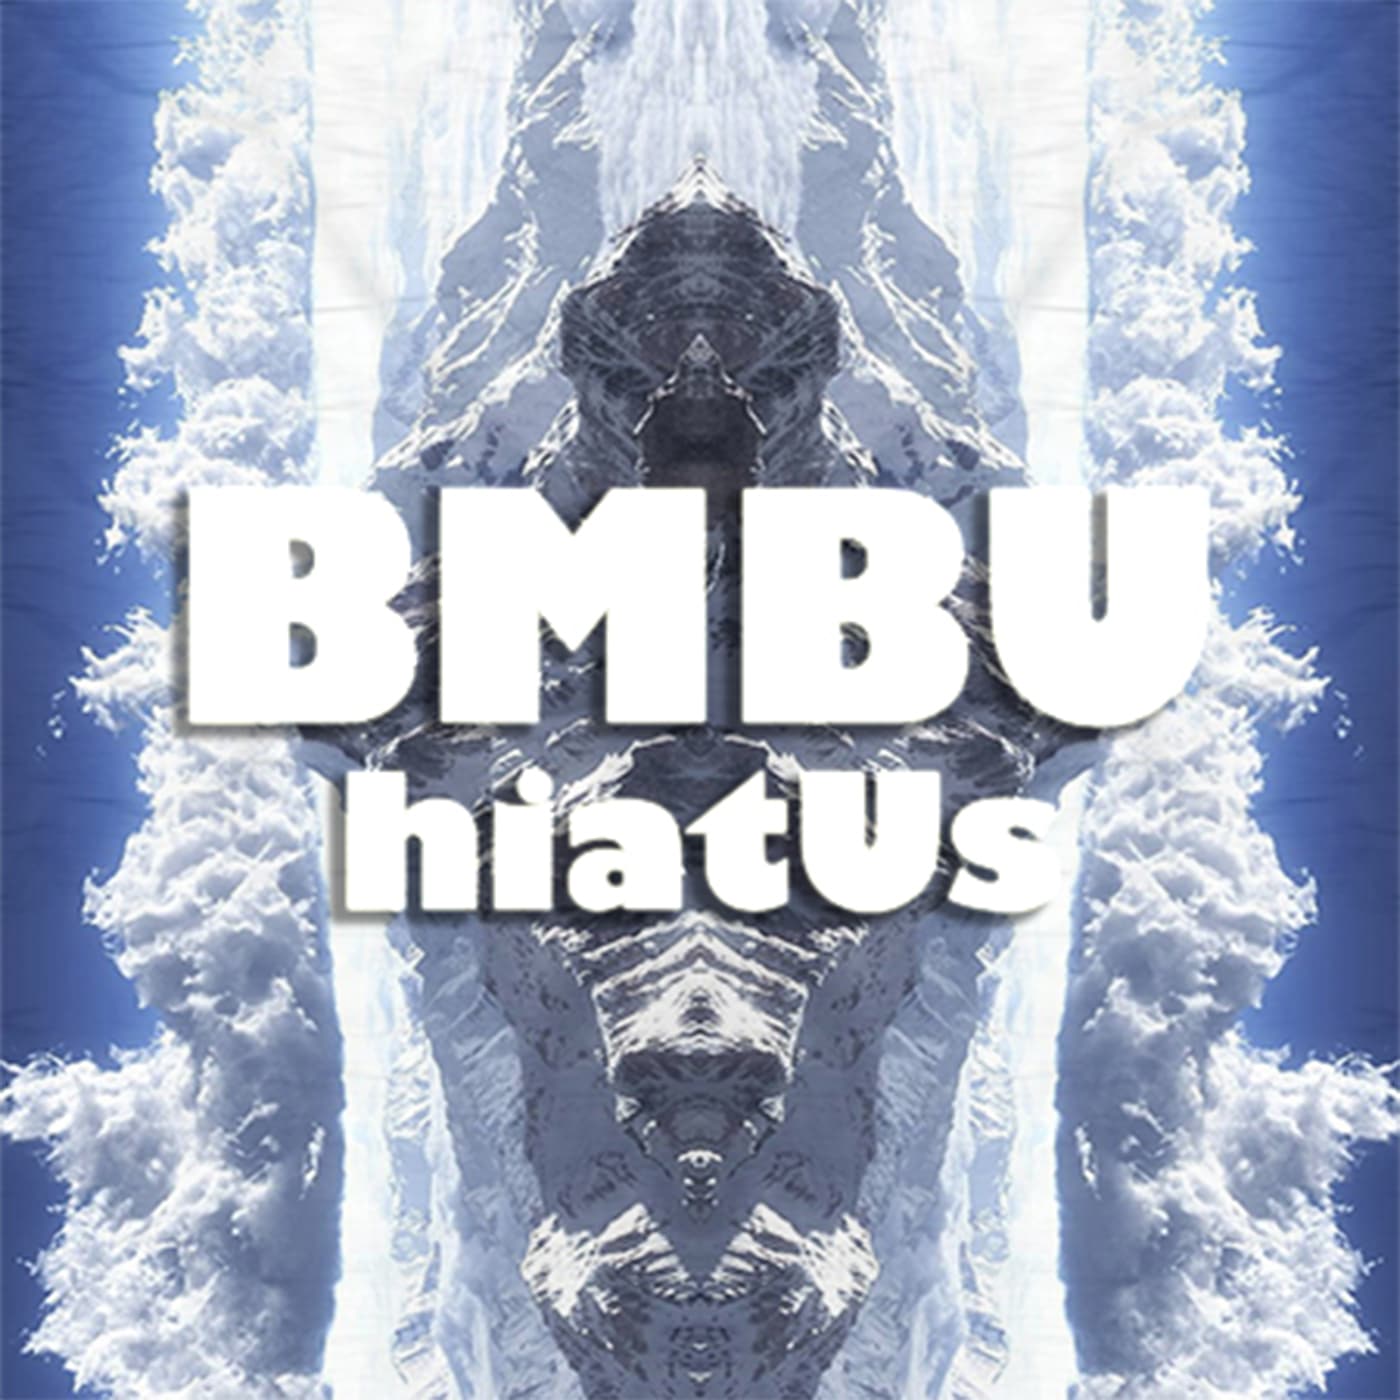 Bmbu - "hiatUs" (Release)